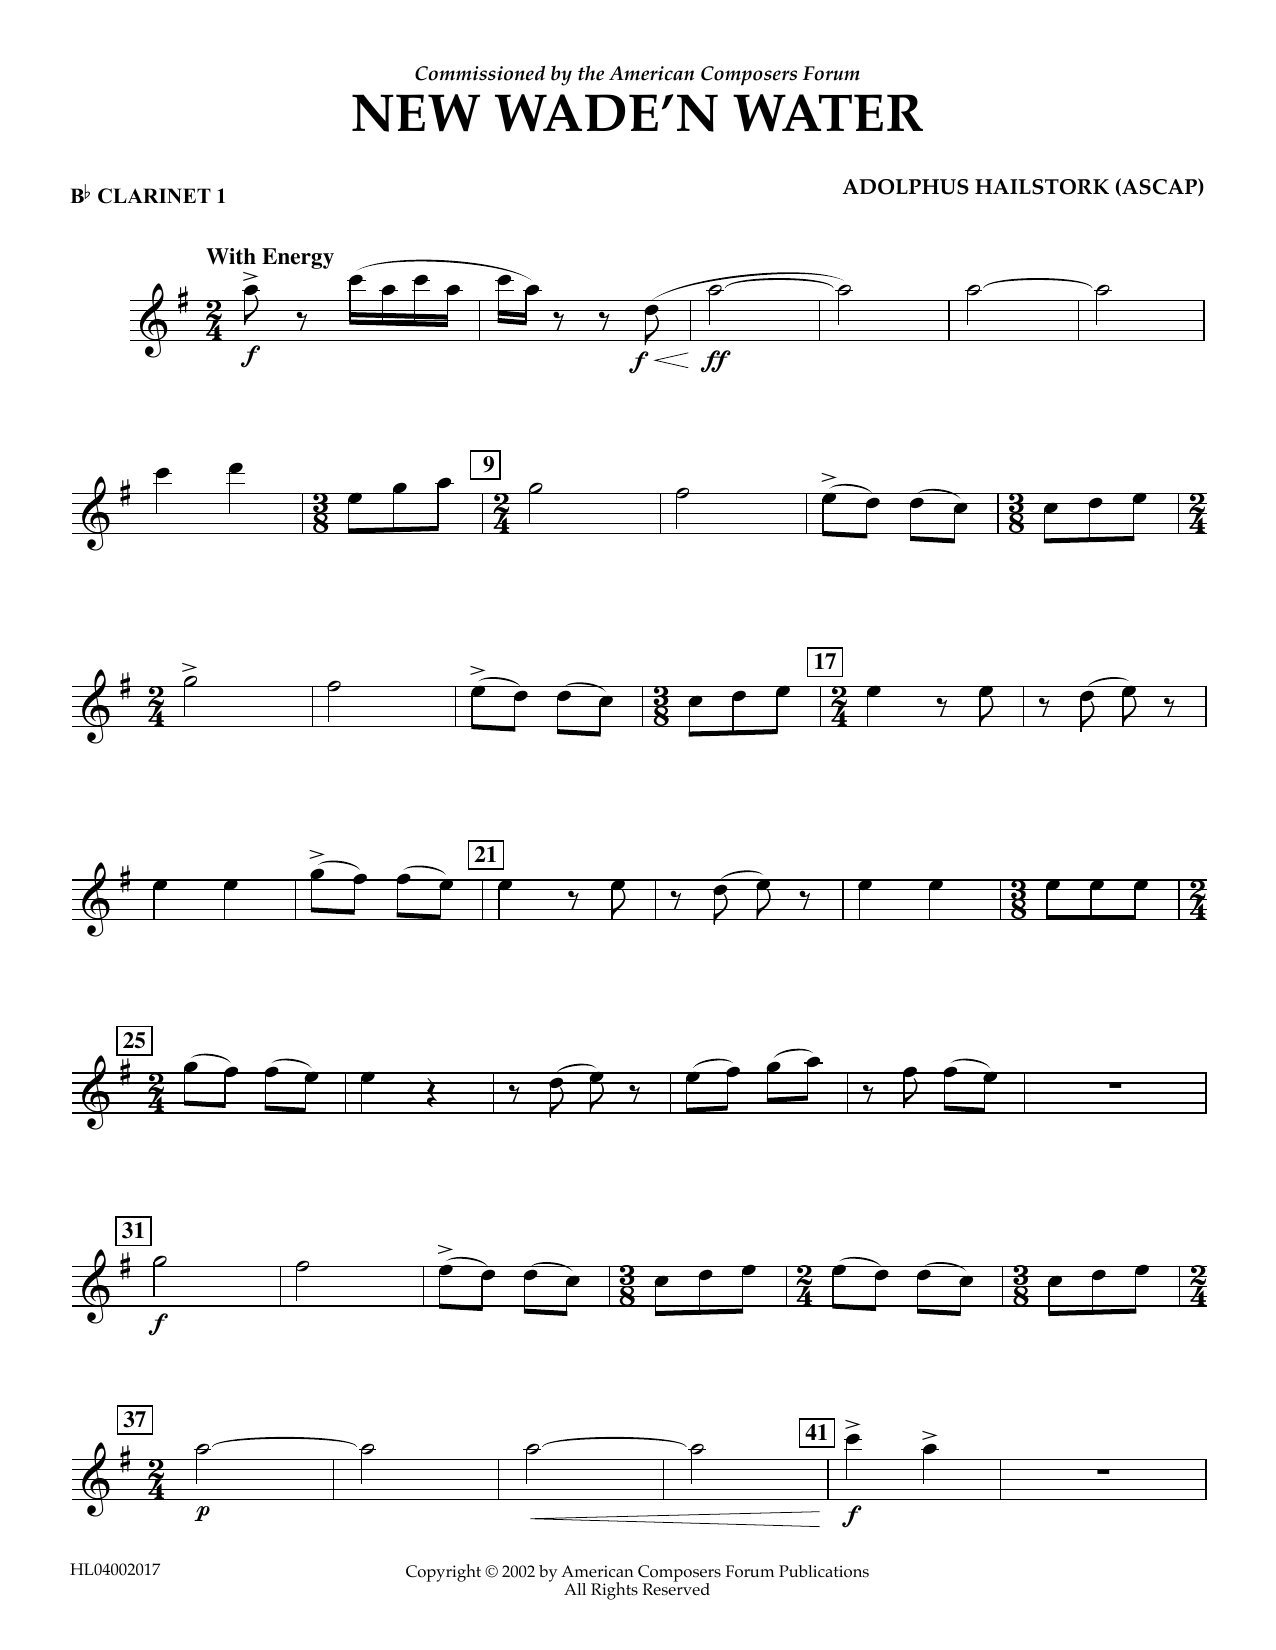 Download Adolphus Hailstork New Wade 'n Water - Bb Clarinet 1 Sheet Music